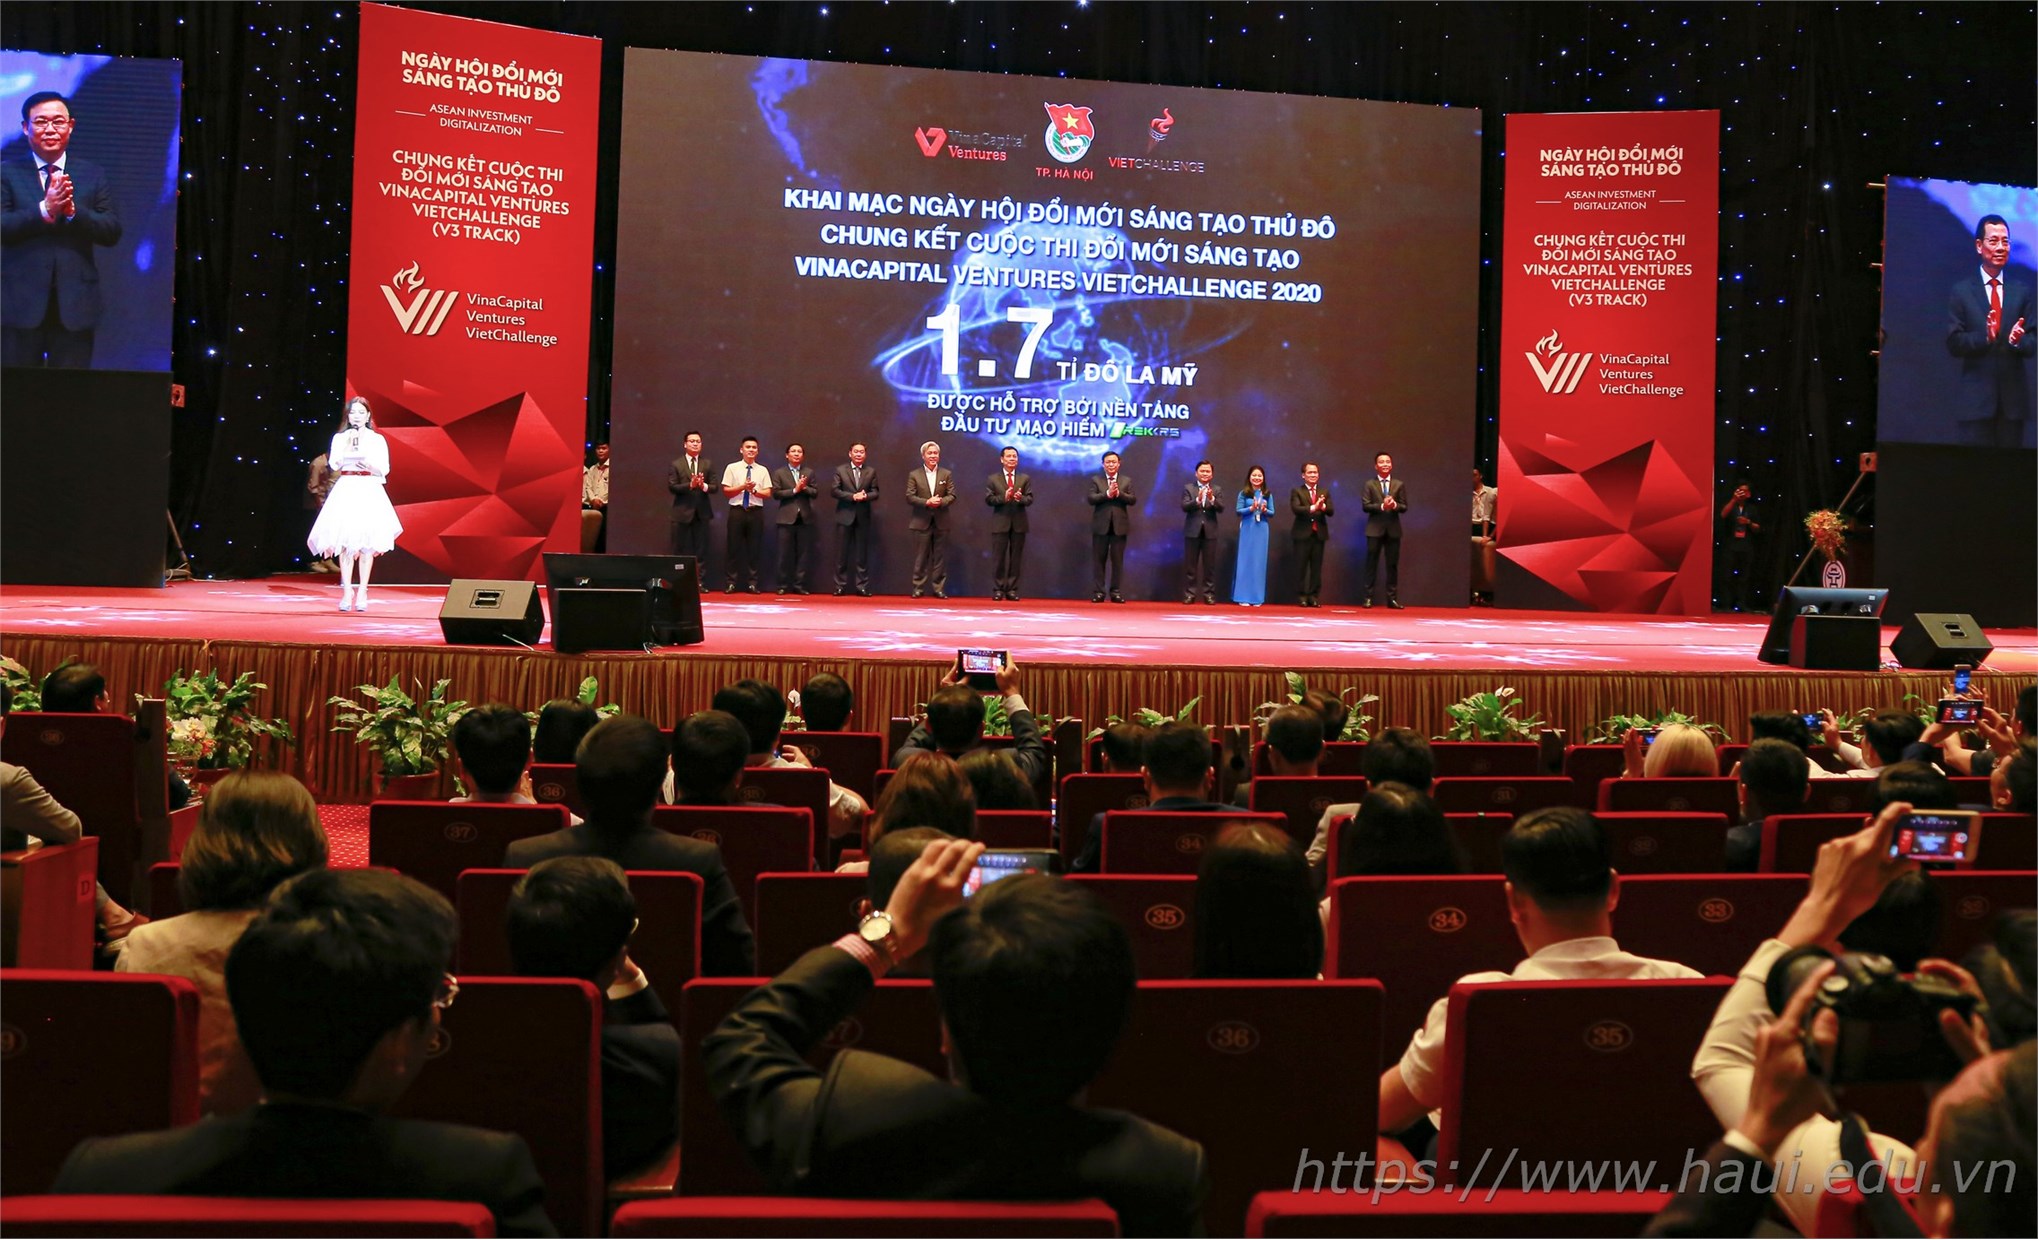 Hanoi University of Industry joins the Capital Ventures Network